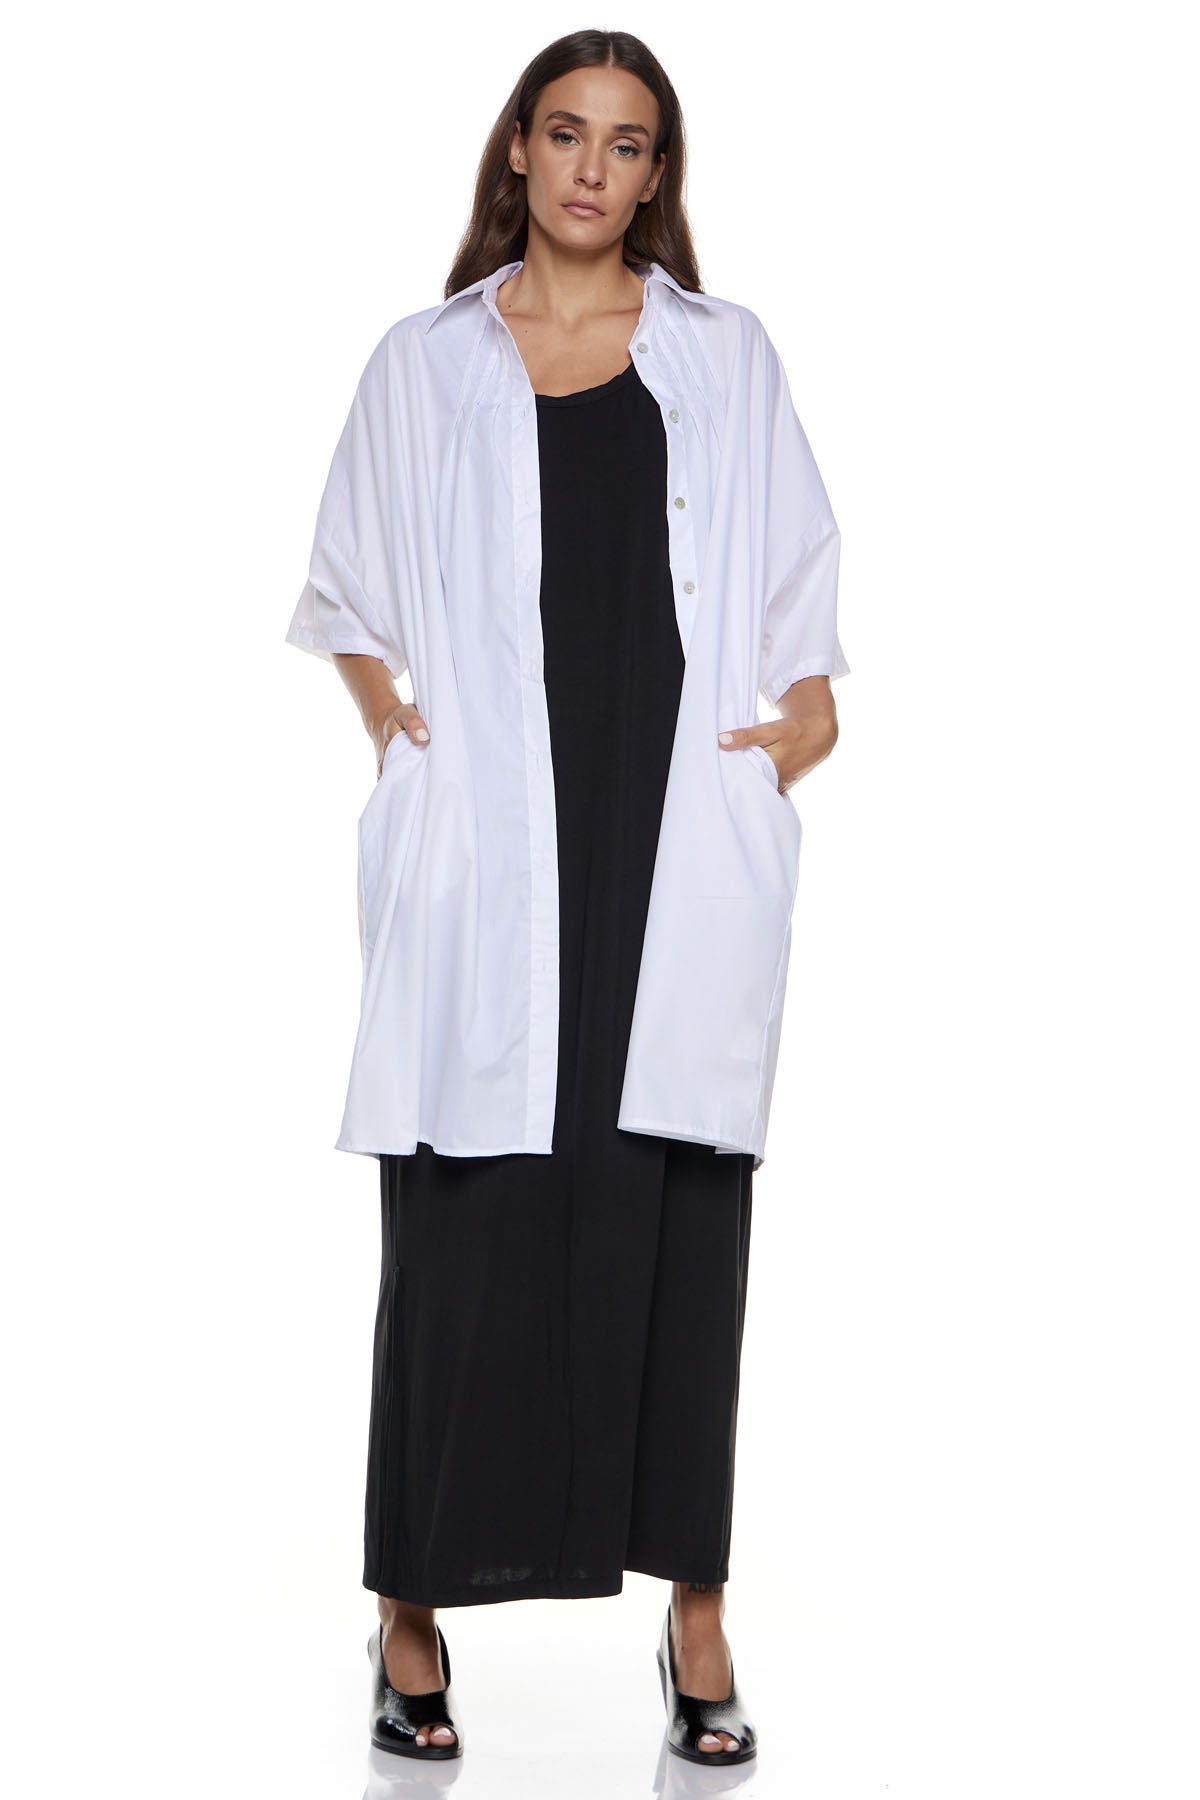 Chic & Simple Combination Dress (Basics) Shawl & Texas Shirt - Black & White